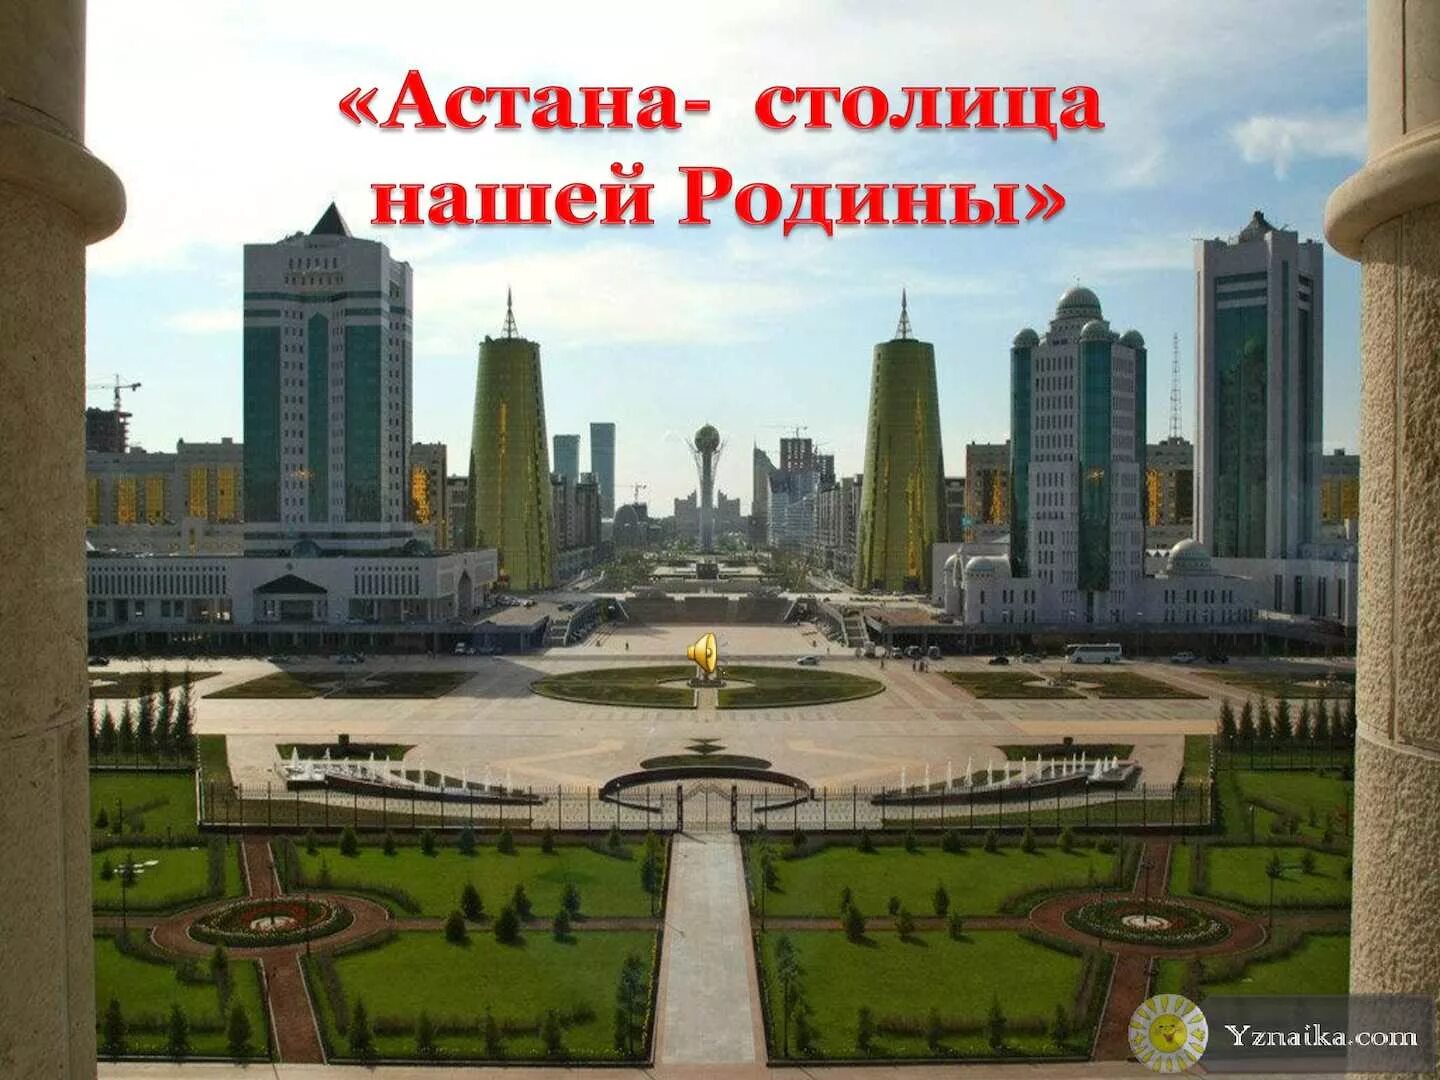 Столица Нурсултан столица. Столица Казахстана Нурсултан 2020. Астана слово